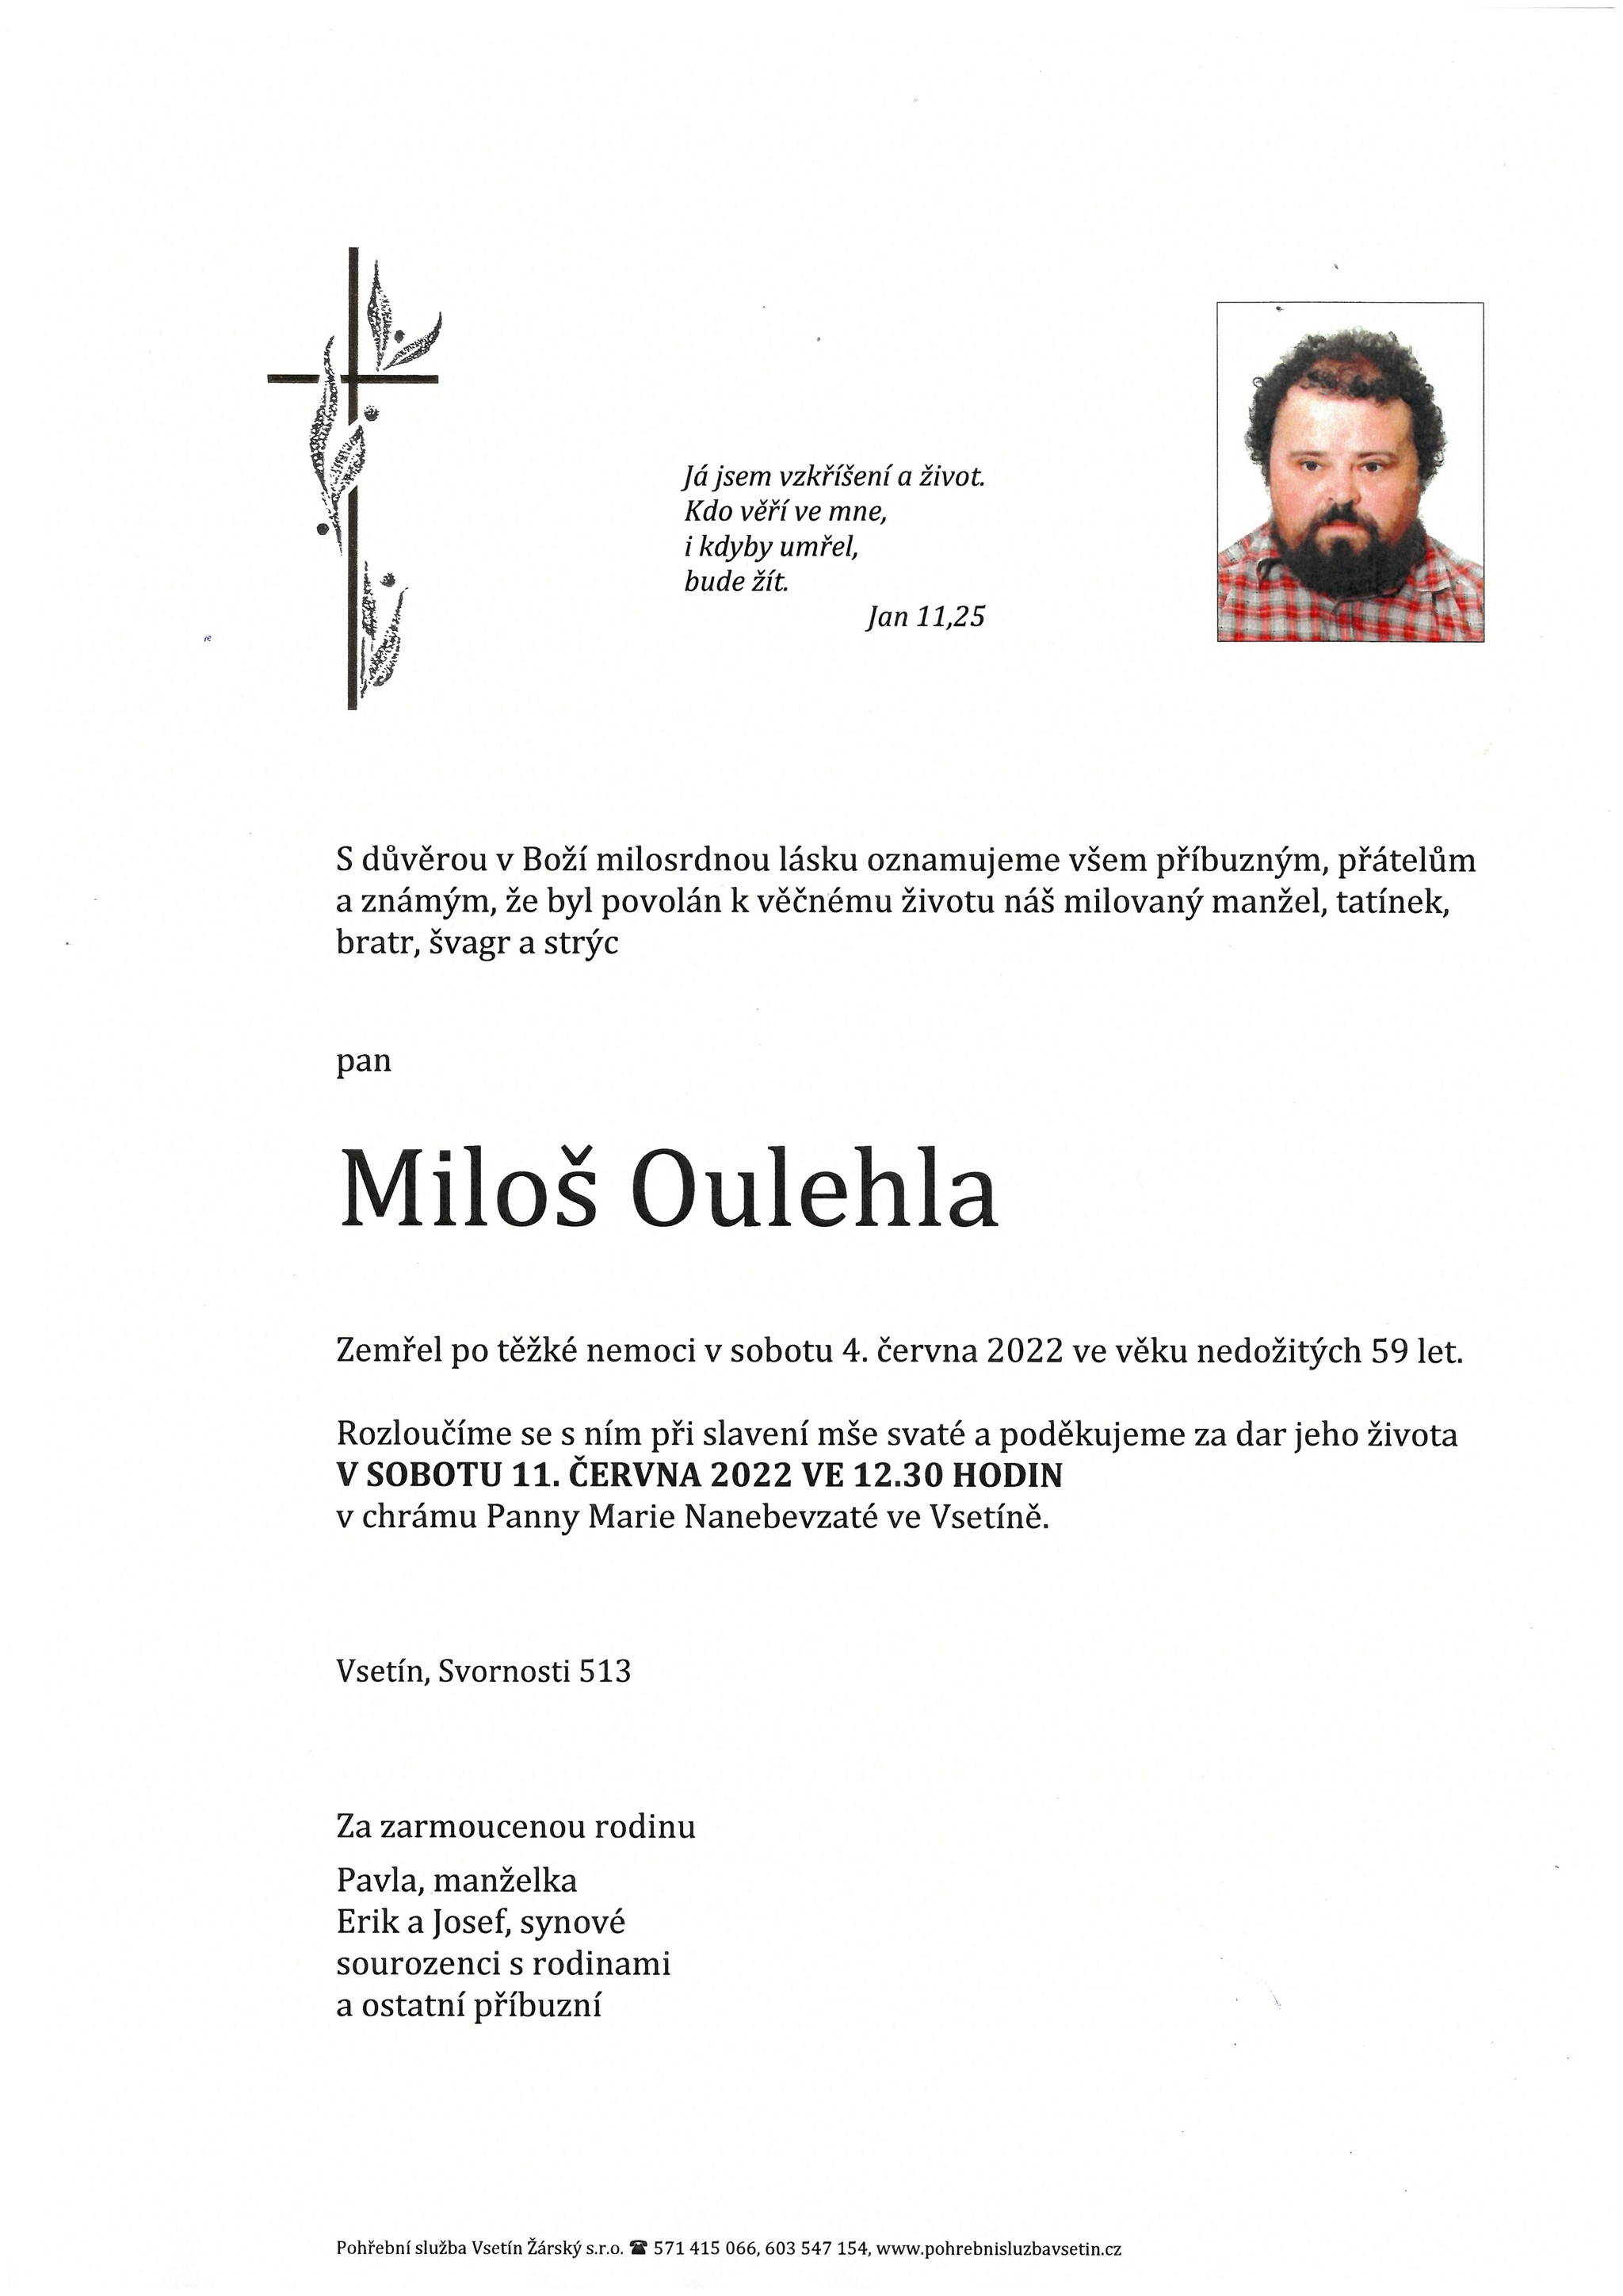 Miloš Oulehla